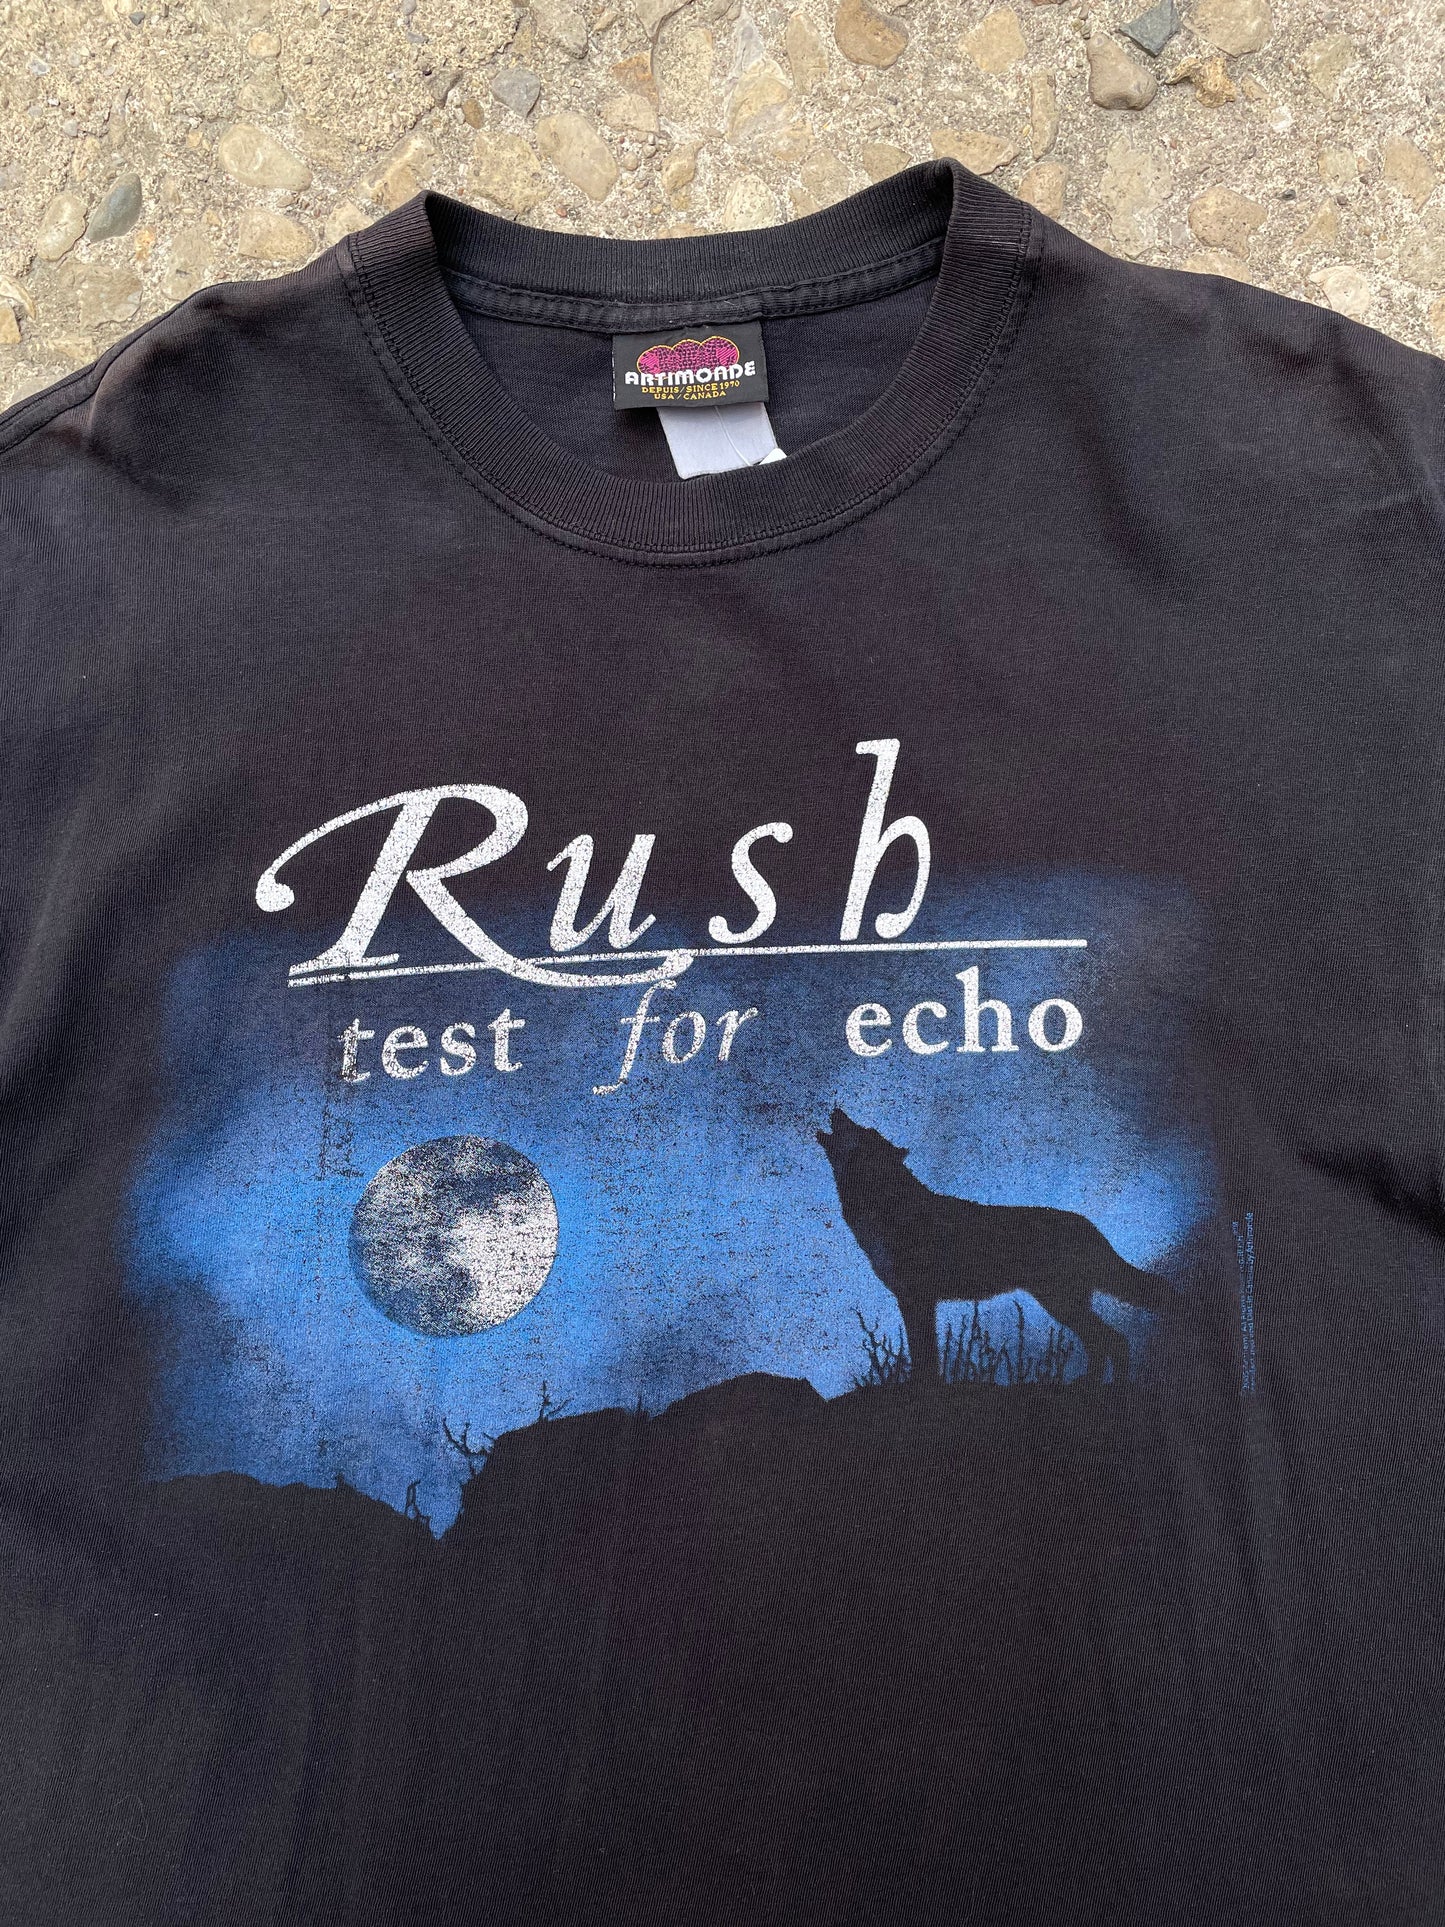 2005 Rush Test for Echo Album Band T-Shirt - L